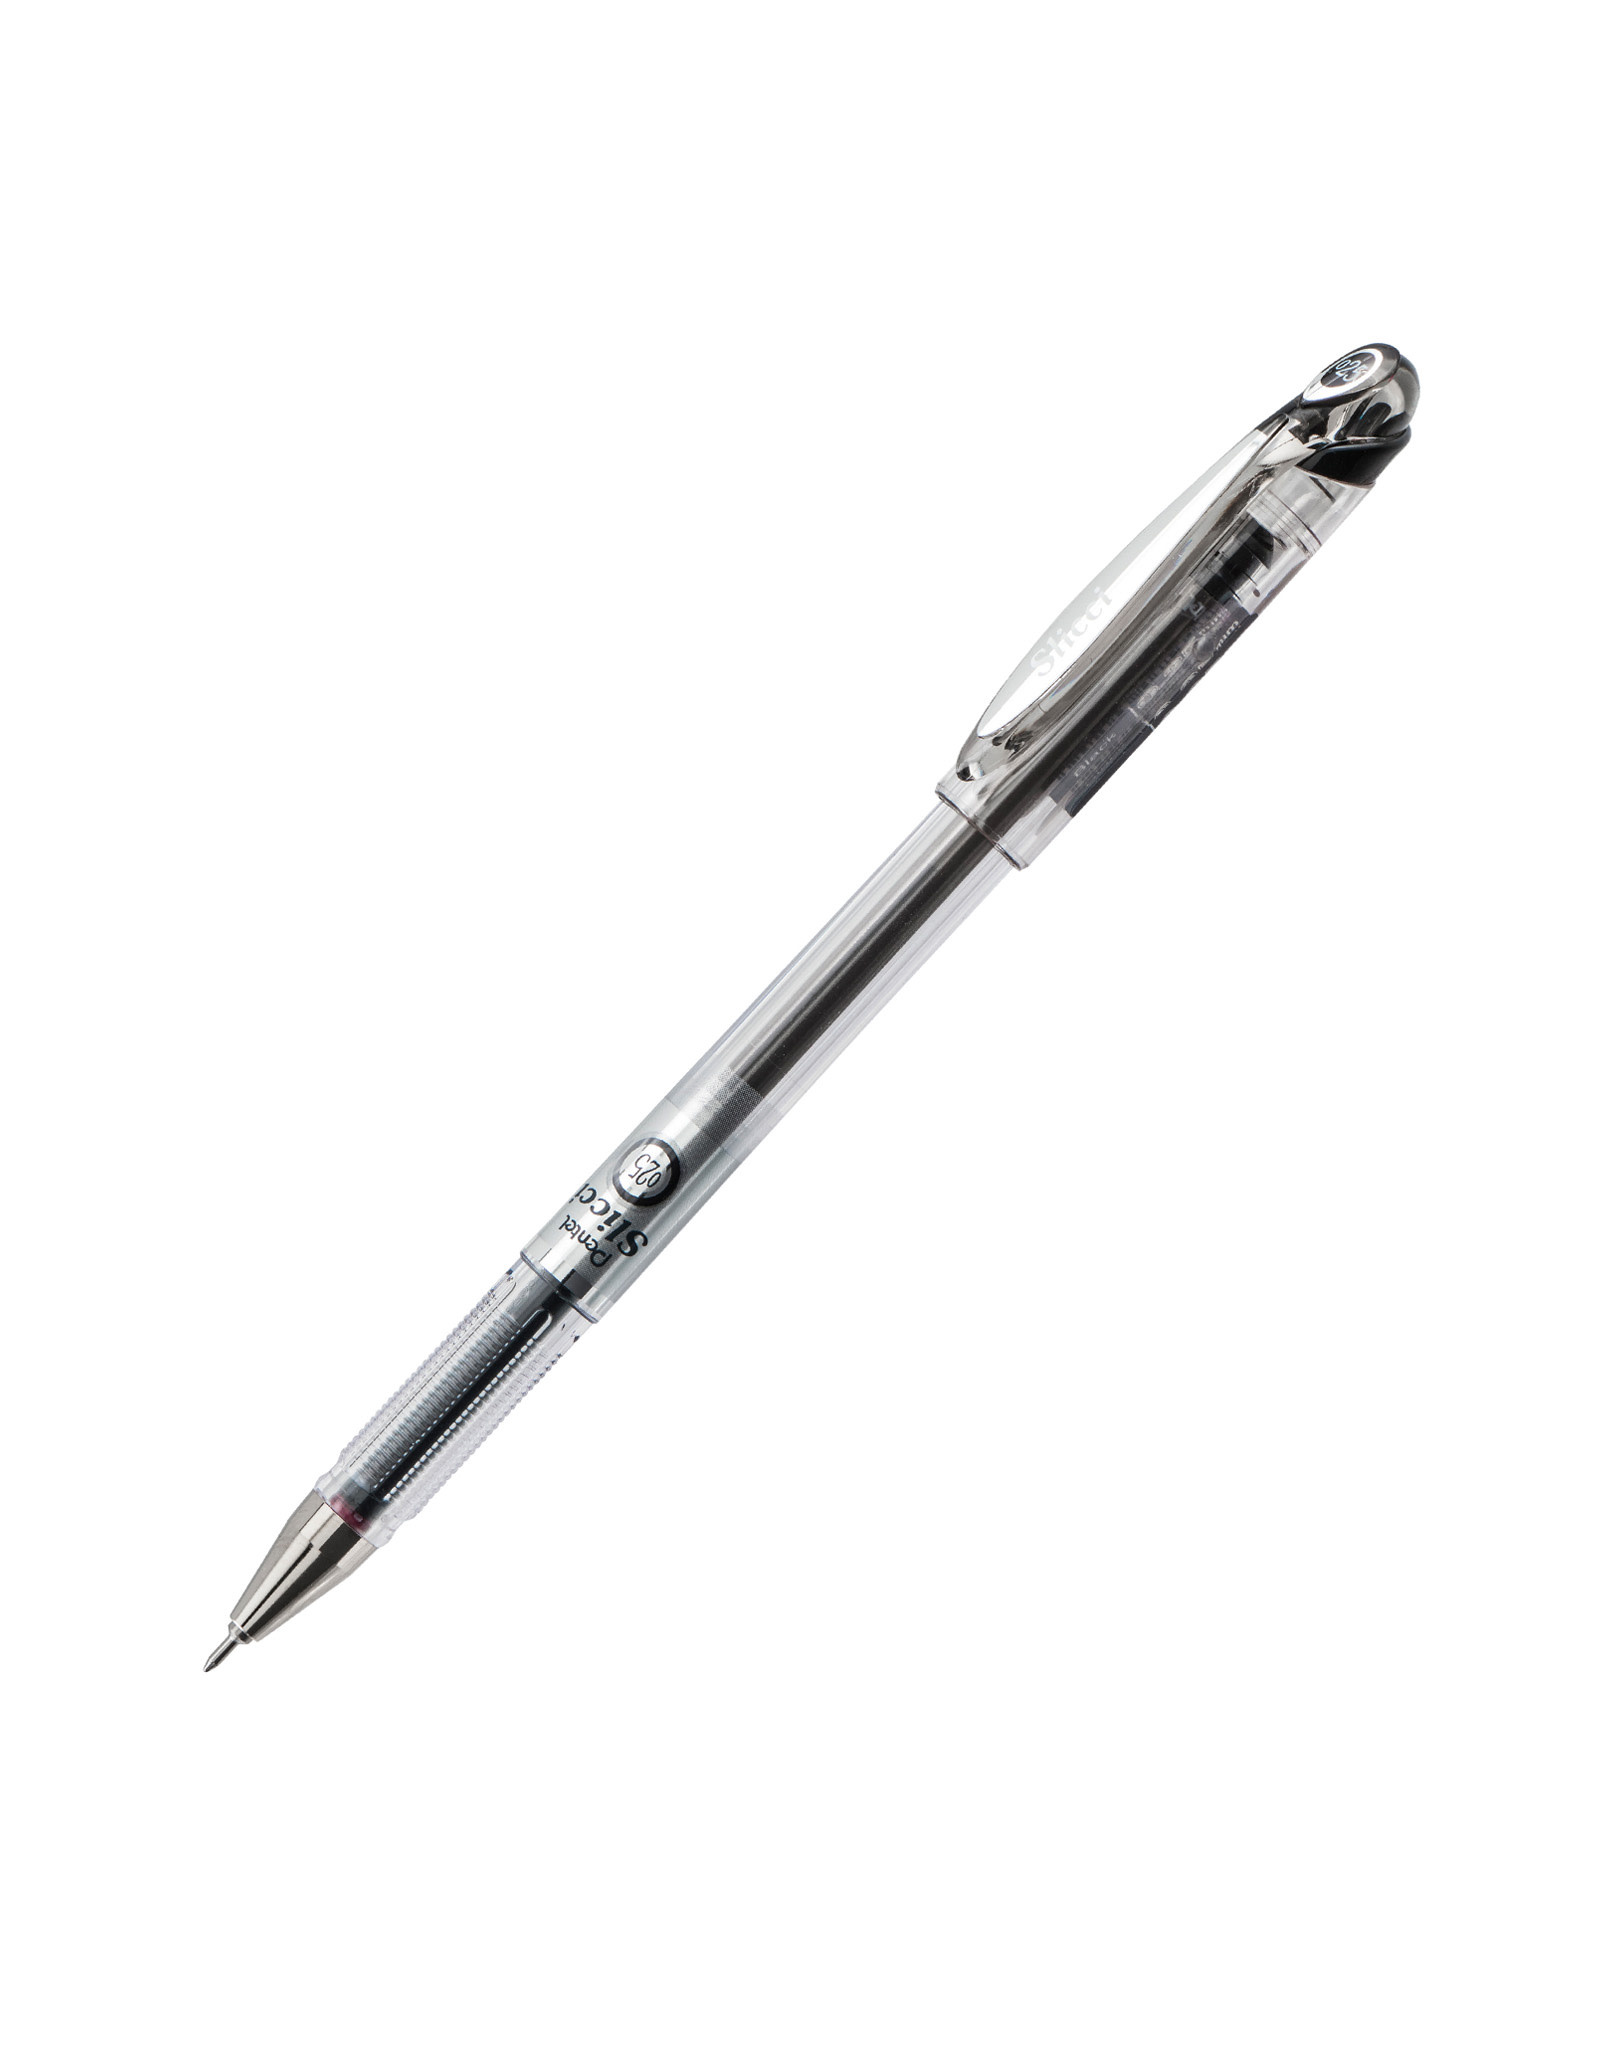 Diamond Dotz Ink Gel Pen handmade *New* FREE pen refill with purchase